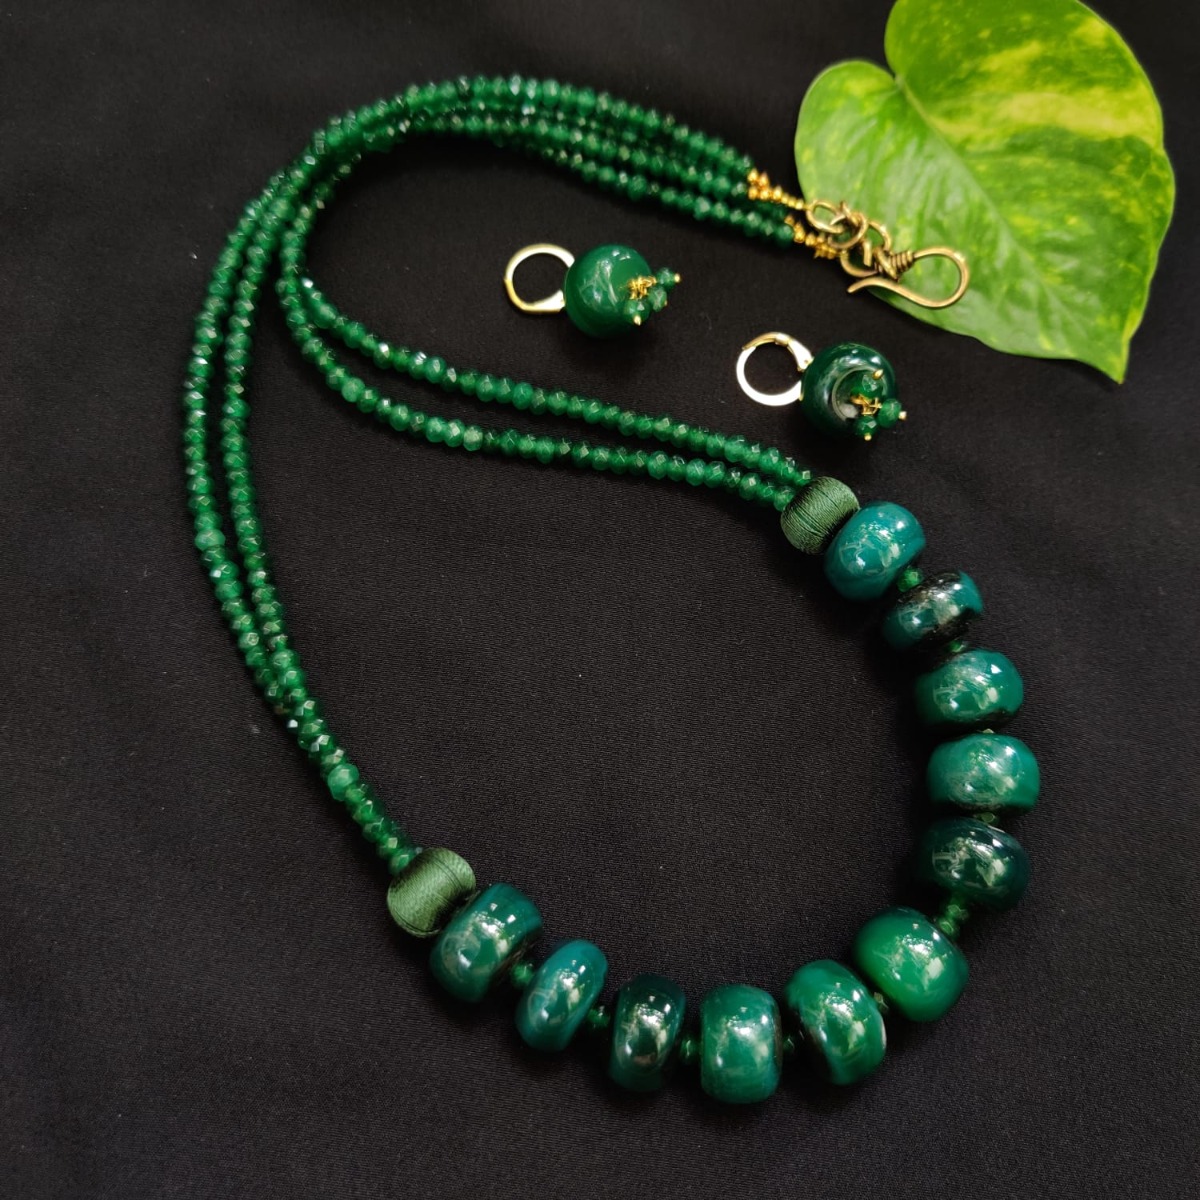 Vintage Green Aurora Borealis Crystal Beads 2 String Necklace￼ Iridescent  color! | eBay